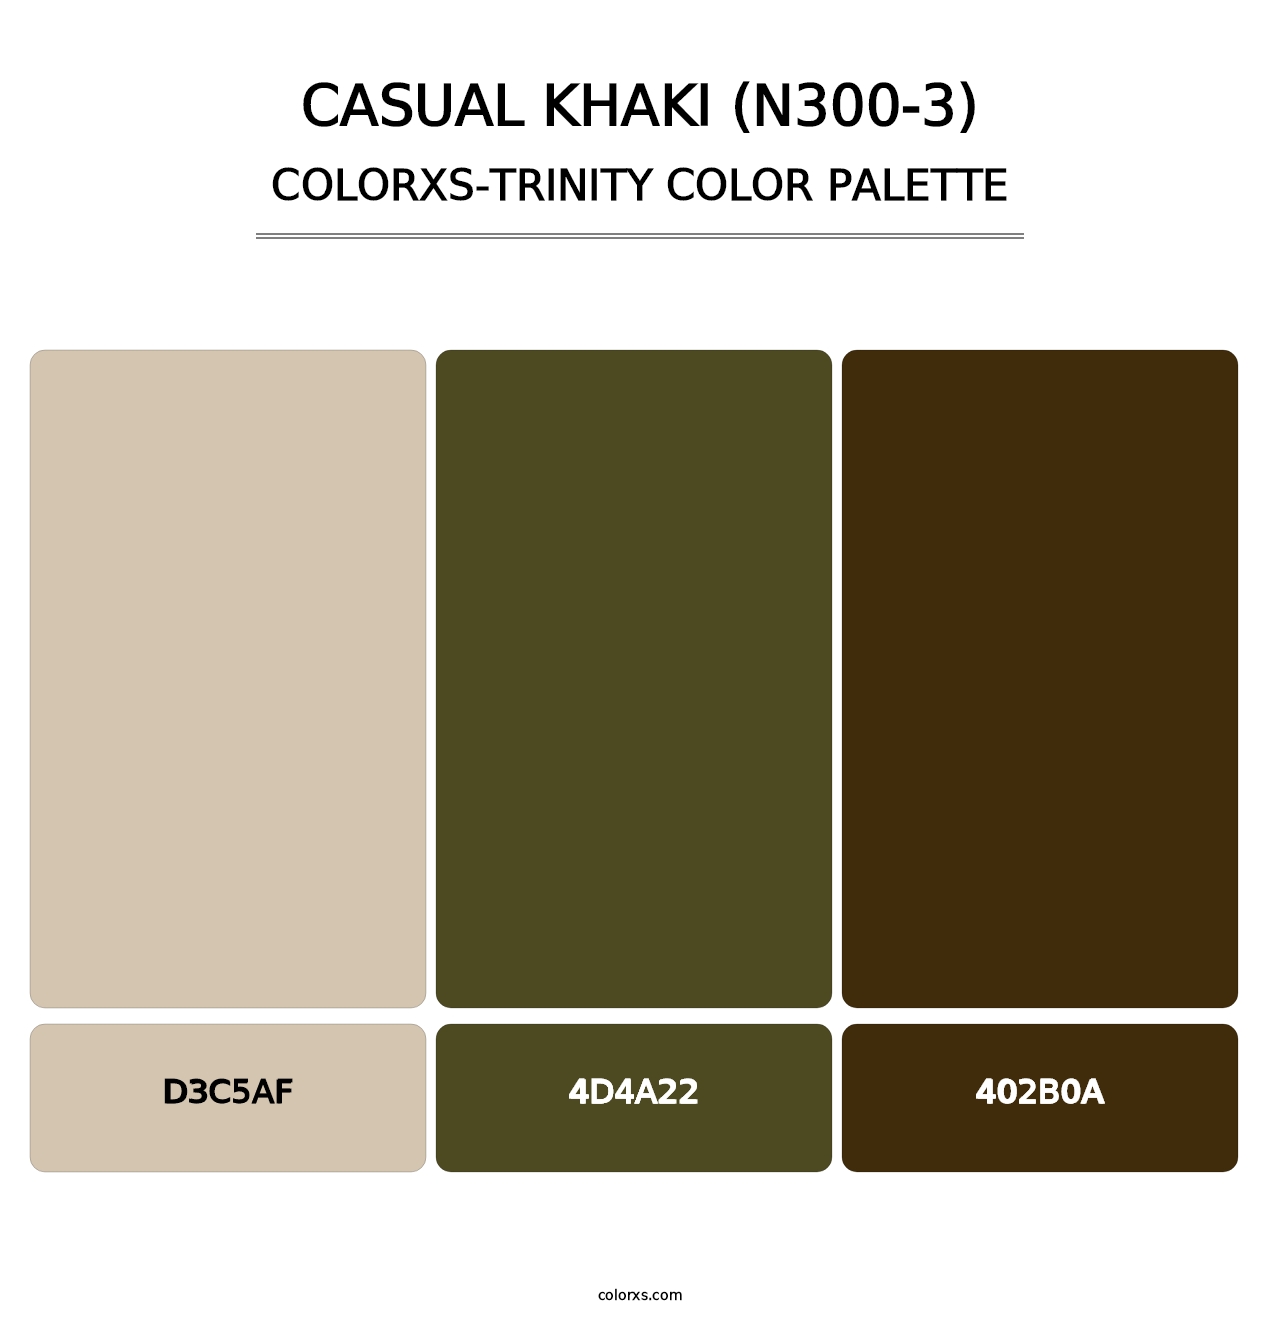 Casual Khaki (N300-3) - Colorxs Trinity Palette